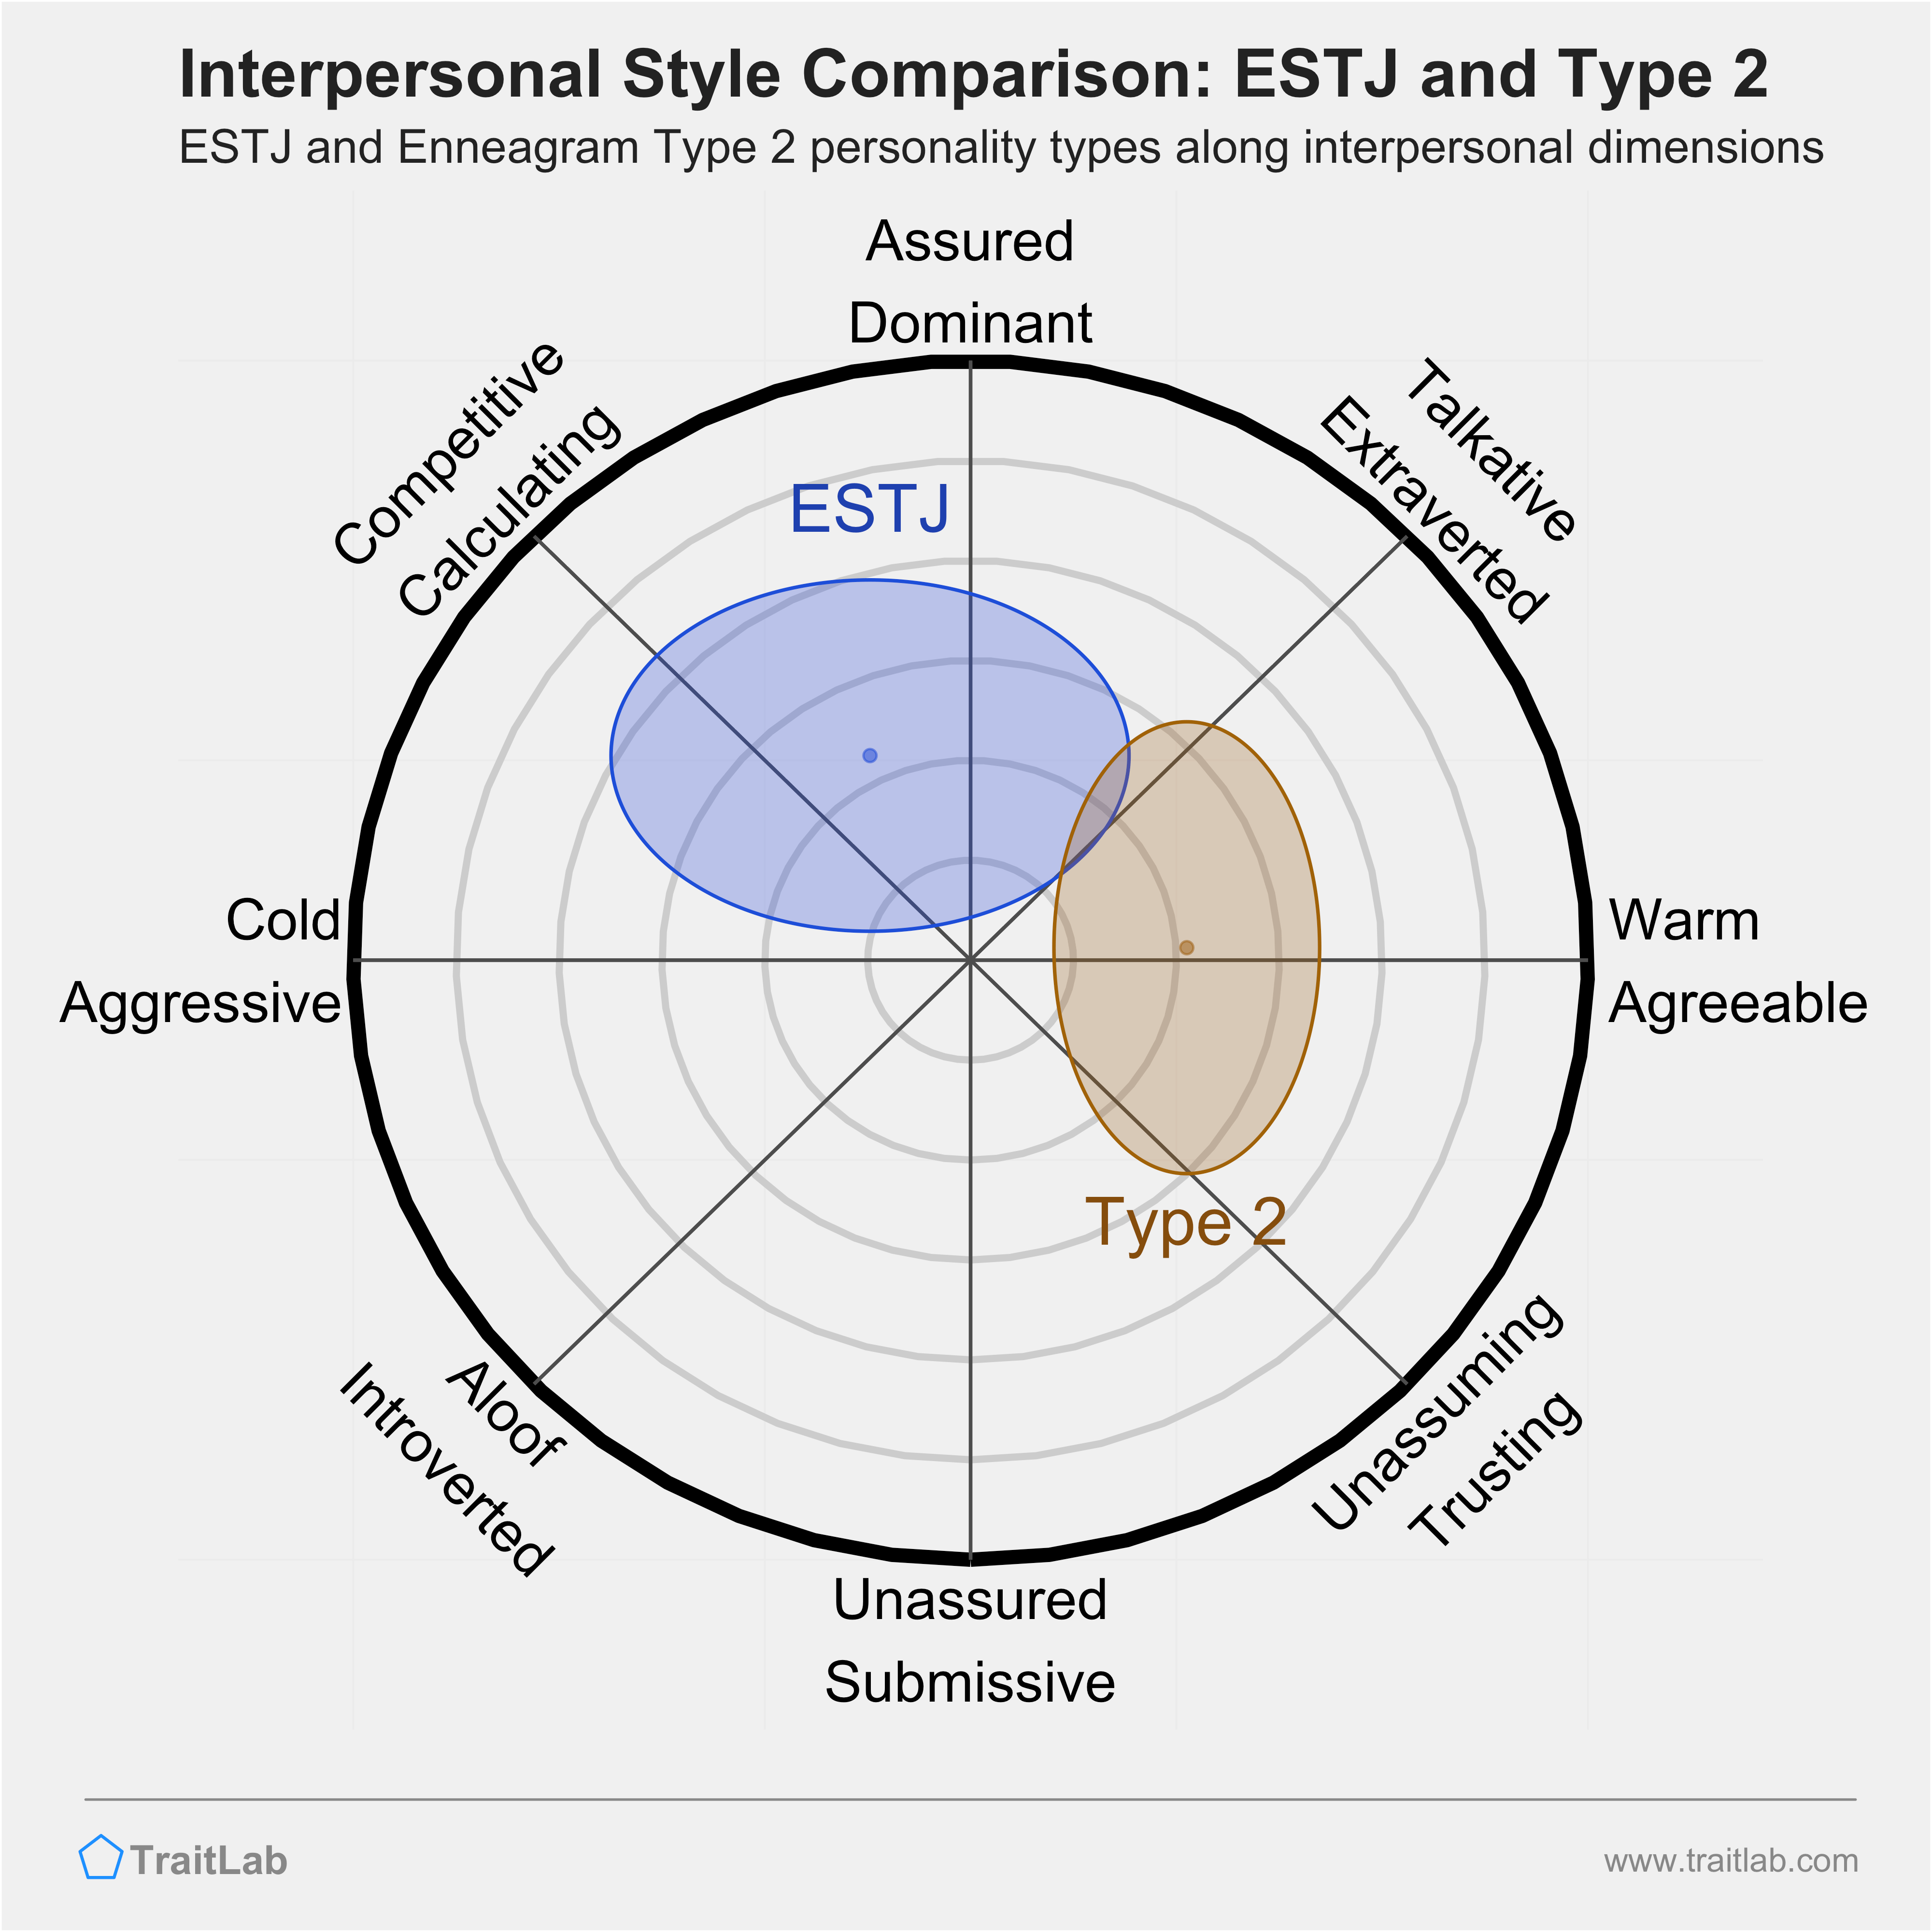 Enneagram ESTJ and Type 2 comparison across interpersonal dimensions